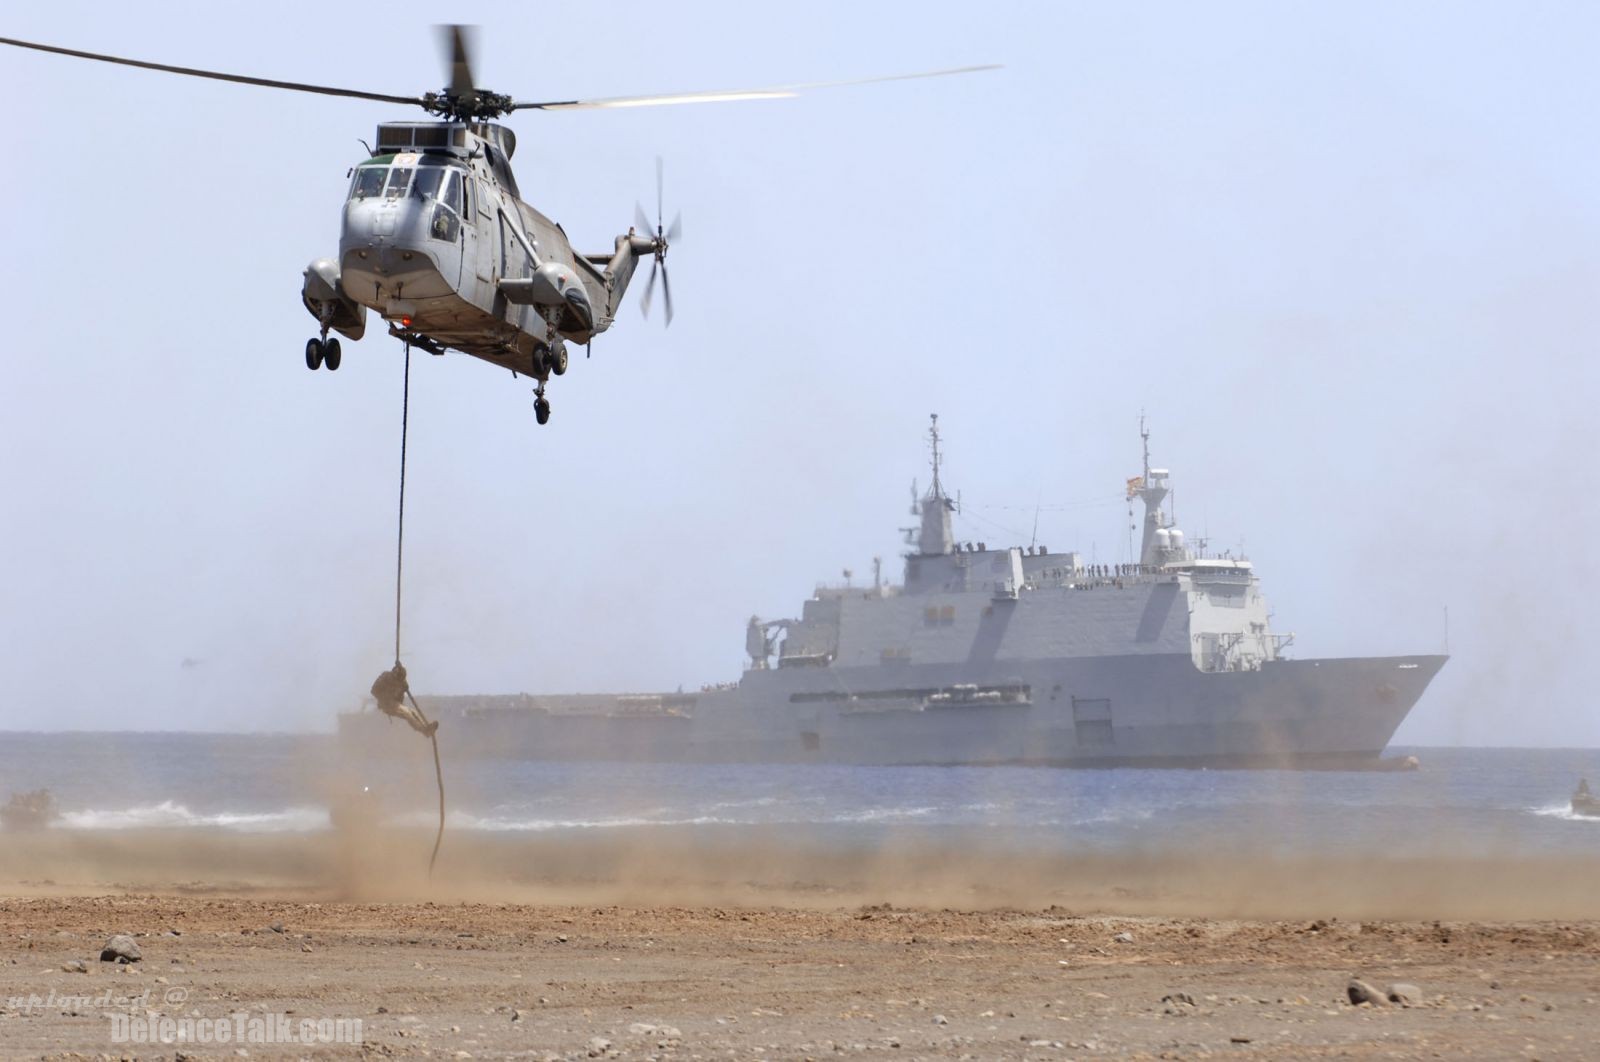 Spanish Sea King Helicopter - Steadfast Jaguar, NRF Exercise